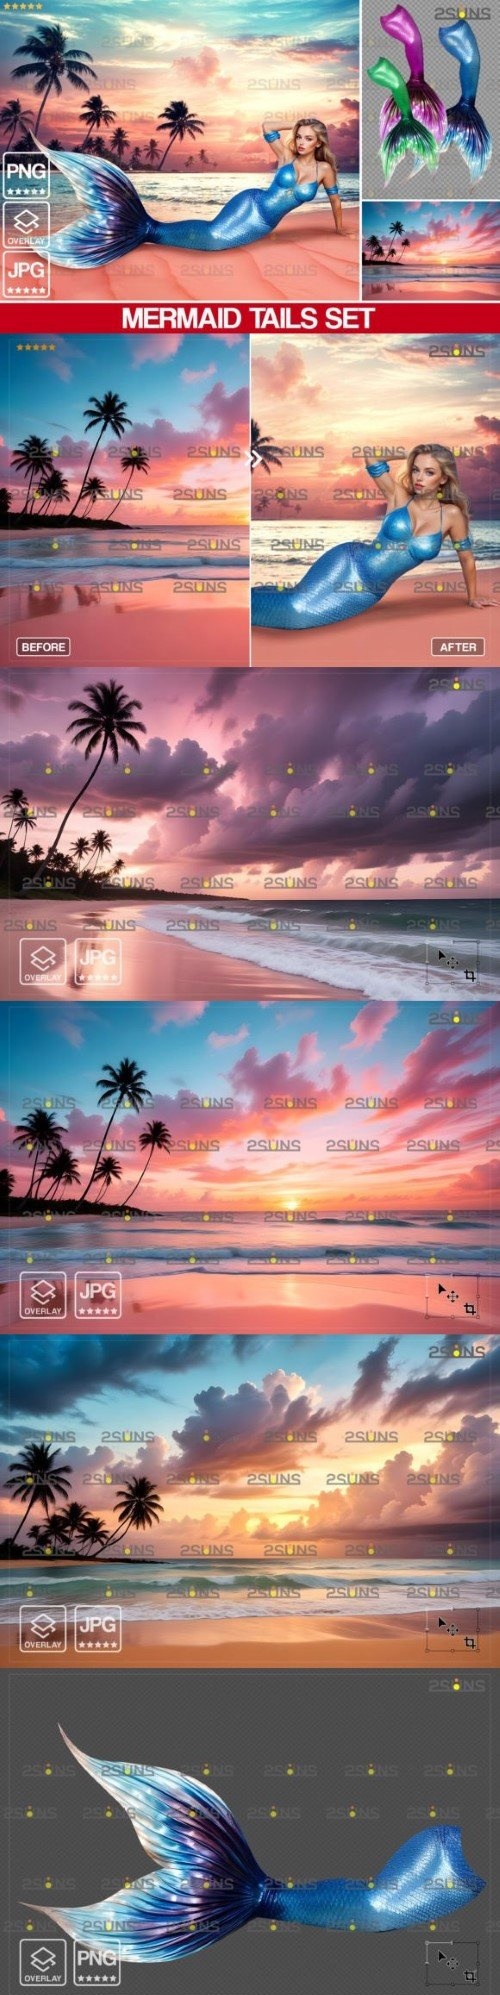 Mermaid photoshop overlays backdrops - Vol 02 - 280356369